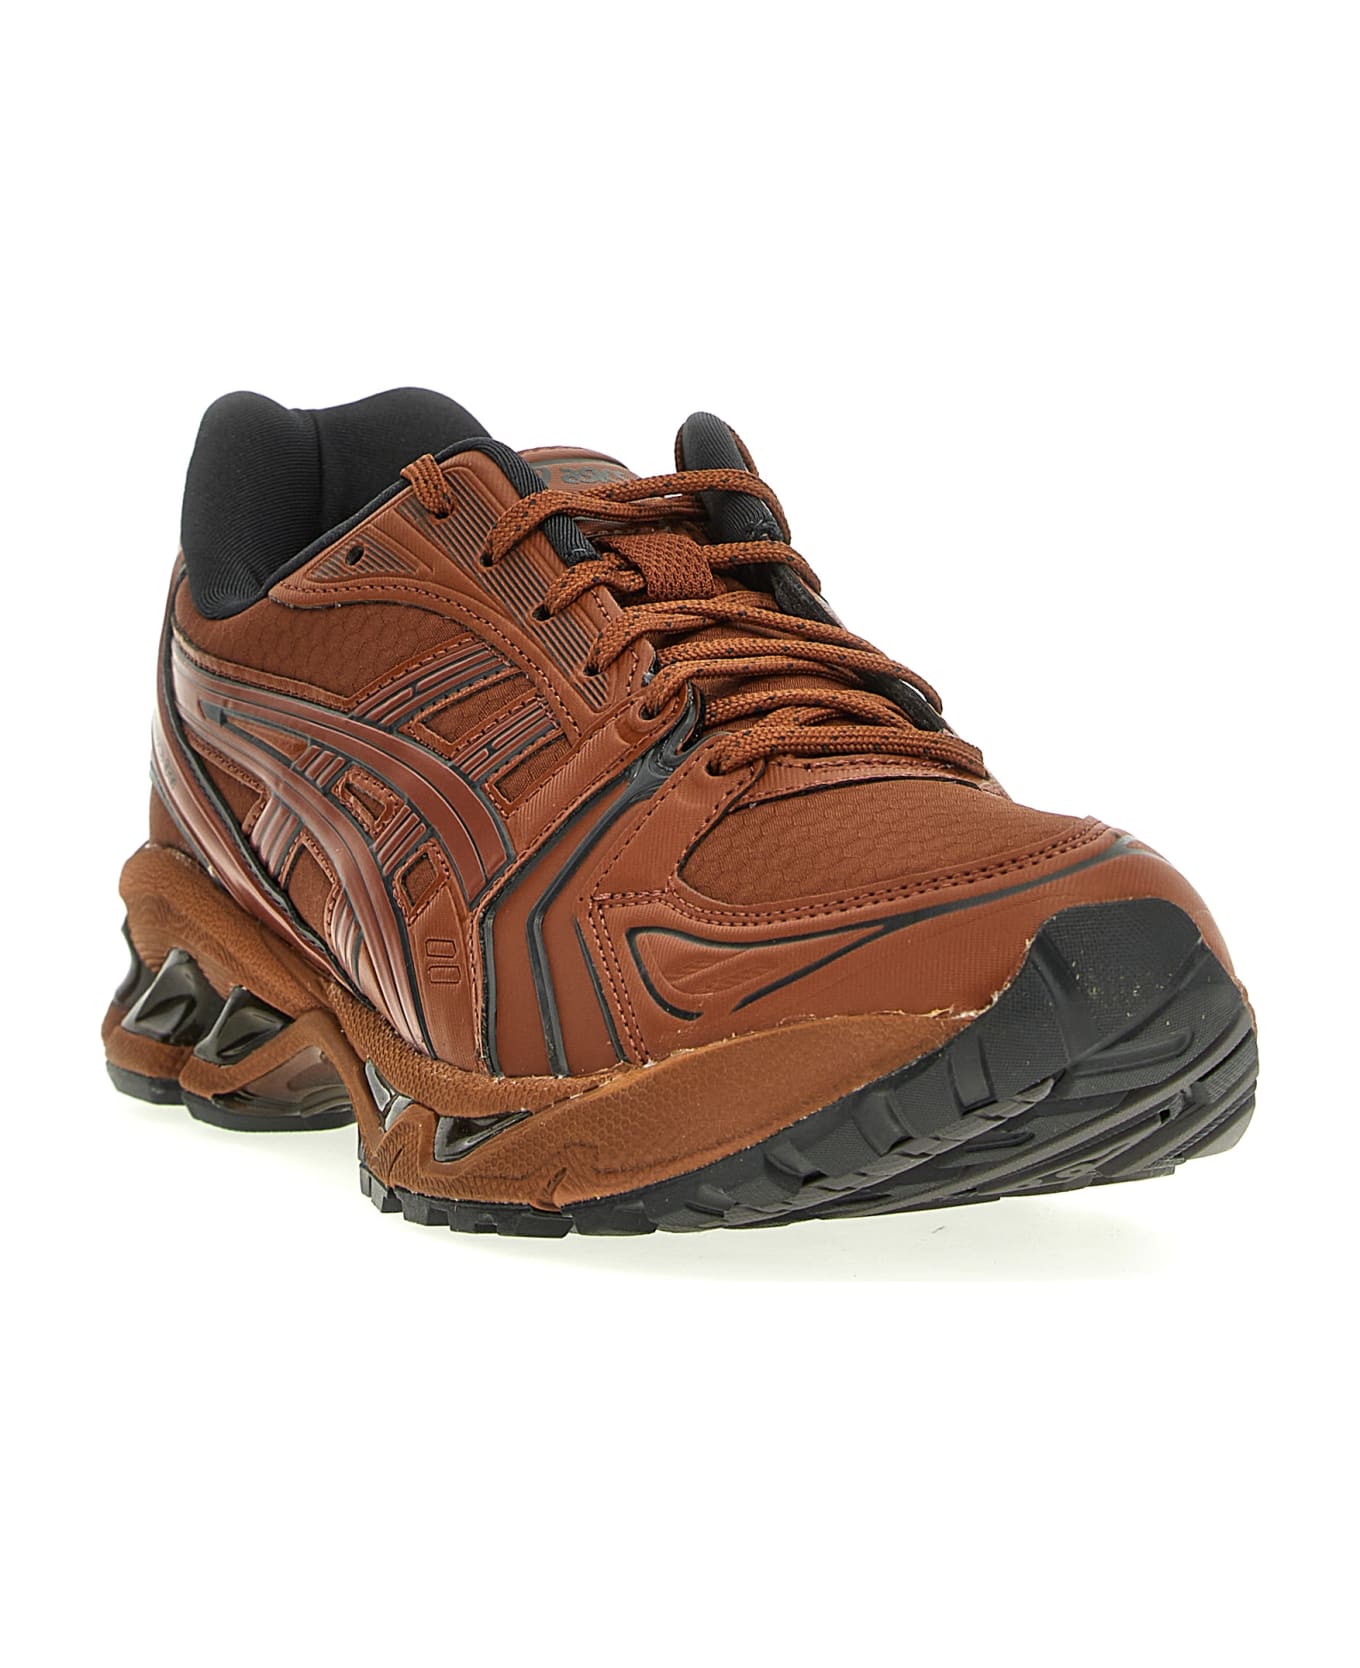 Asics 'gel-kayano 14' Sneakers - Rusty Brown/graphite Grey スニーカー